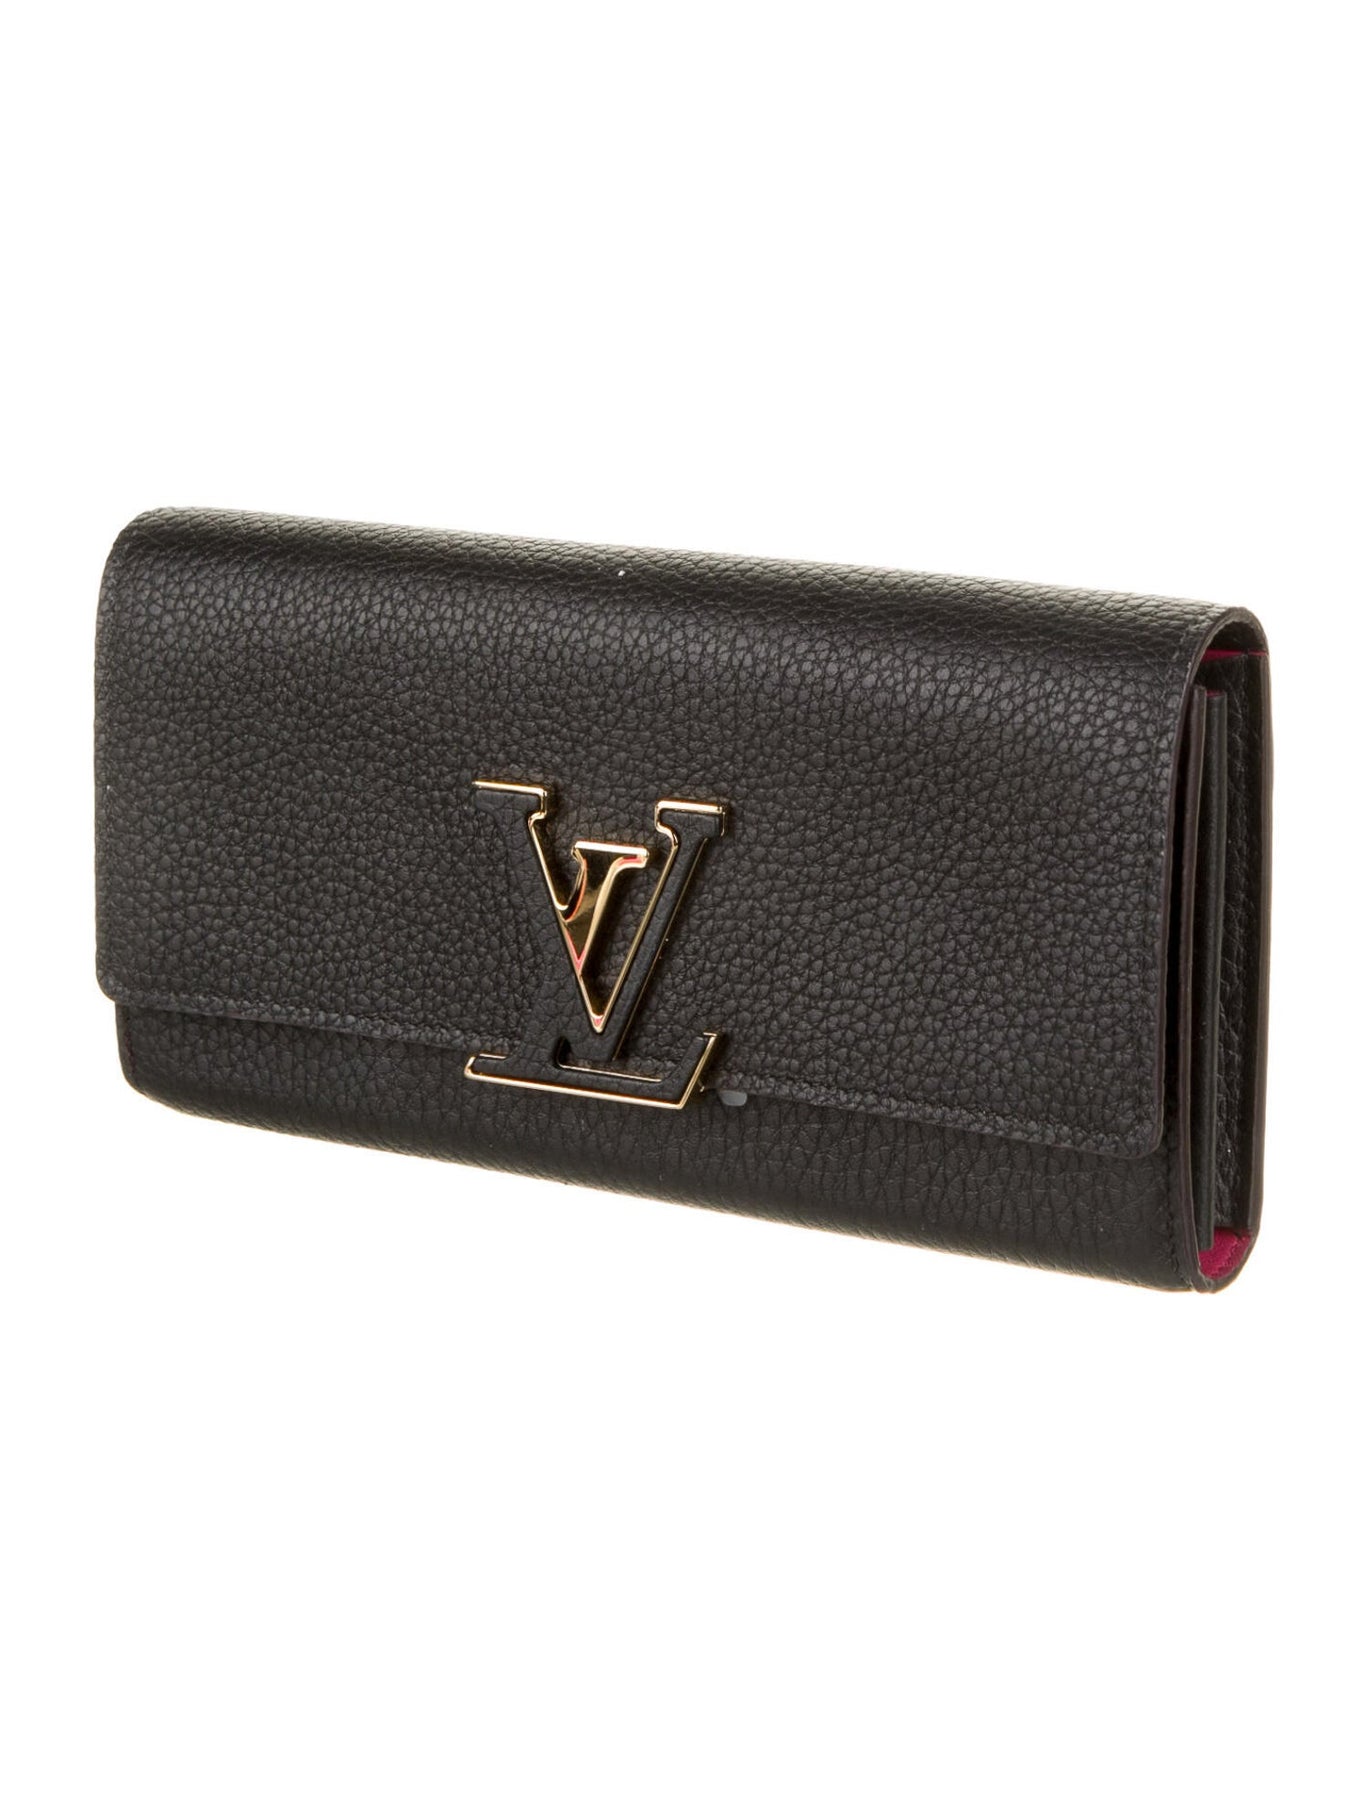 Pre-Owned Louis Vuitton Capucines Wallet